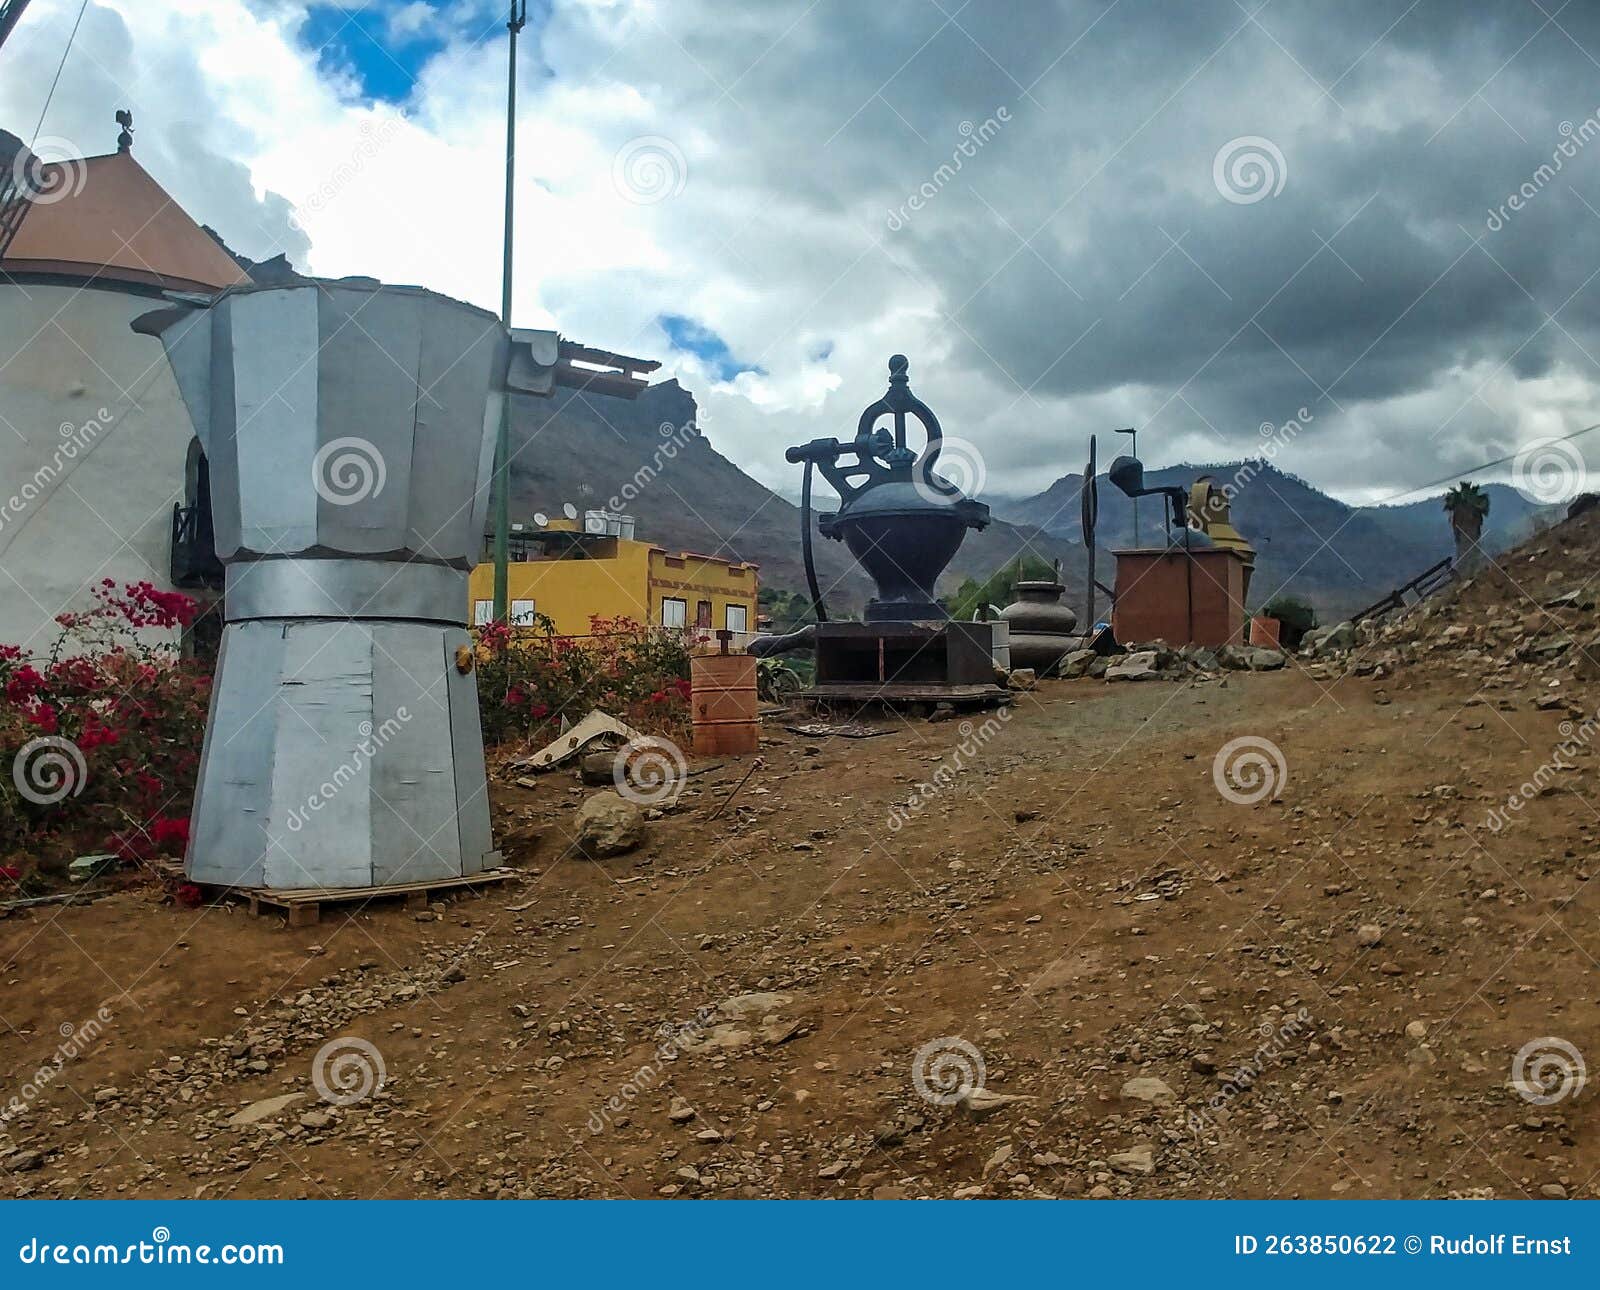 giant coffee machines at the old wind mill molino de viento near mogan, gran canaria island, spain